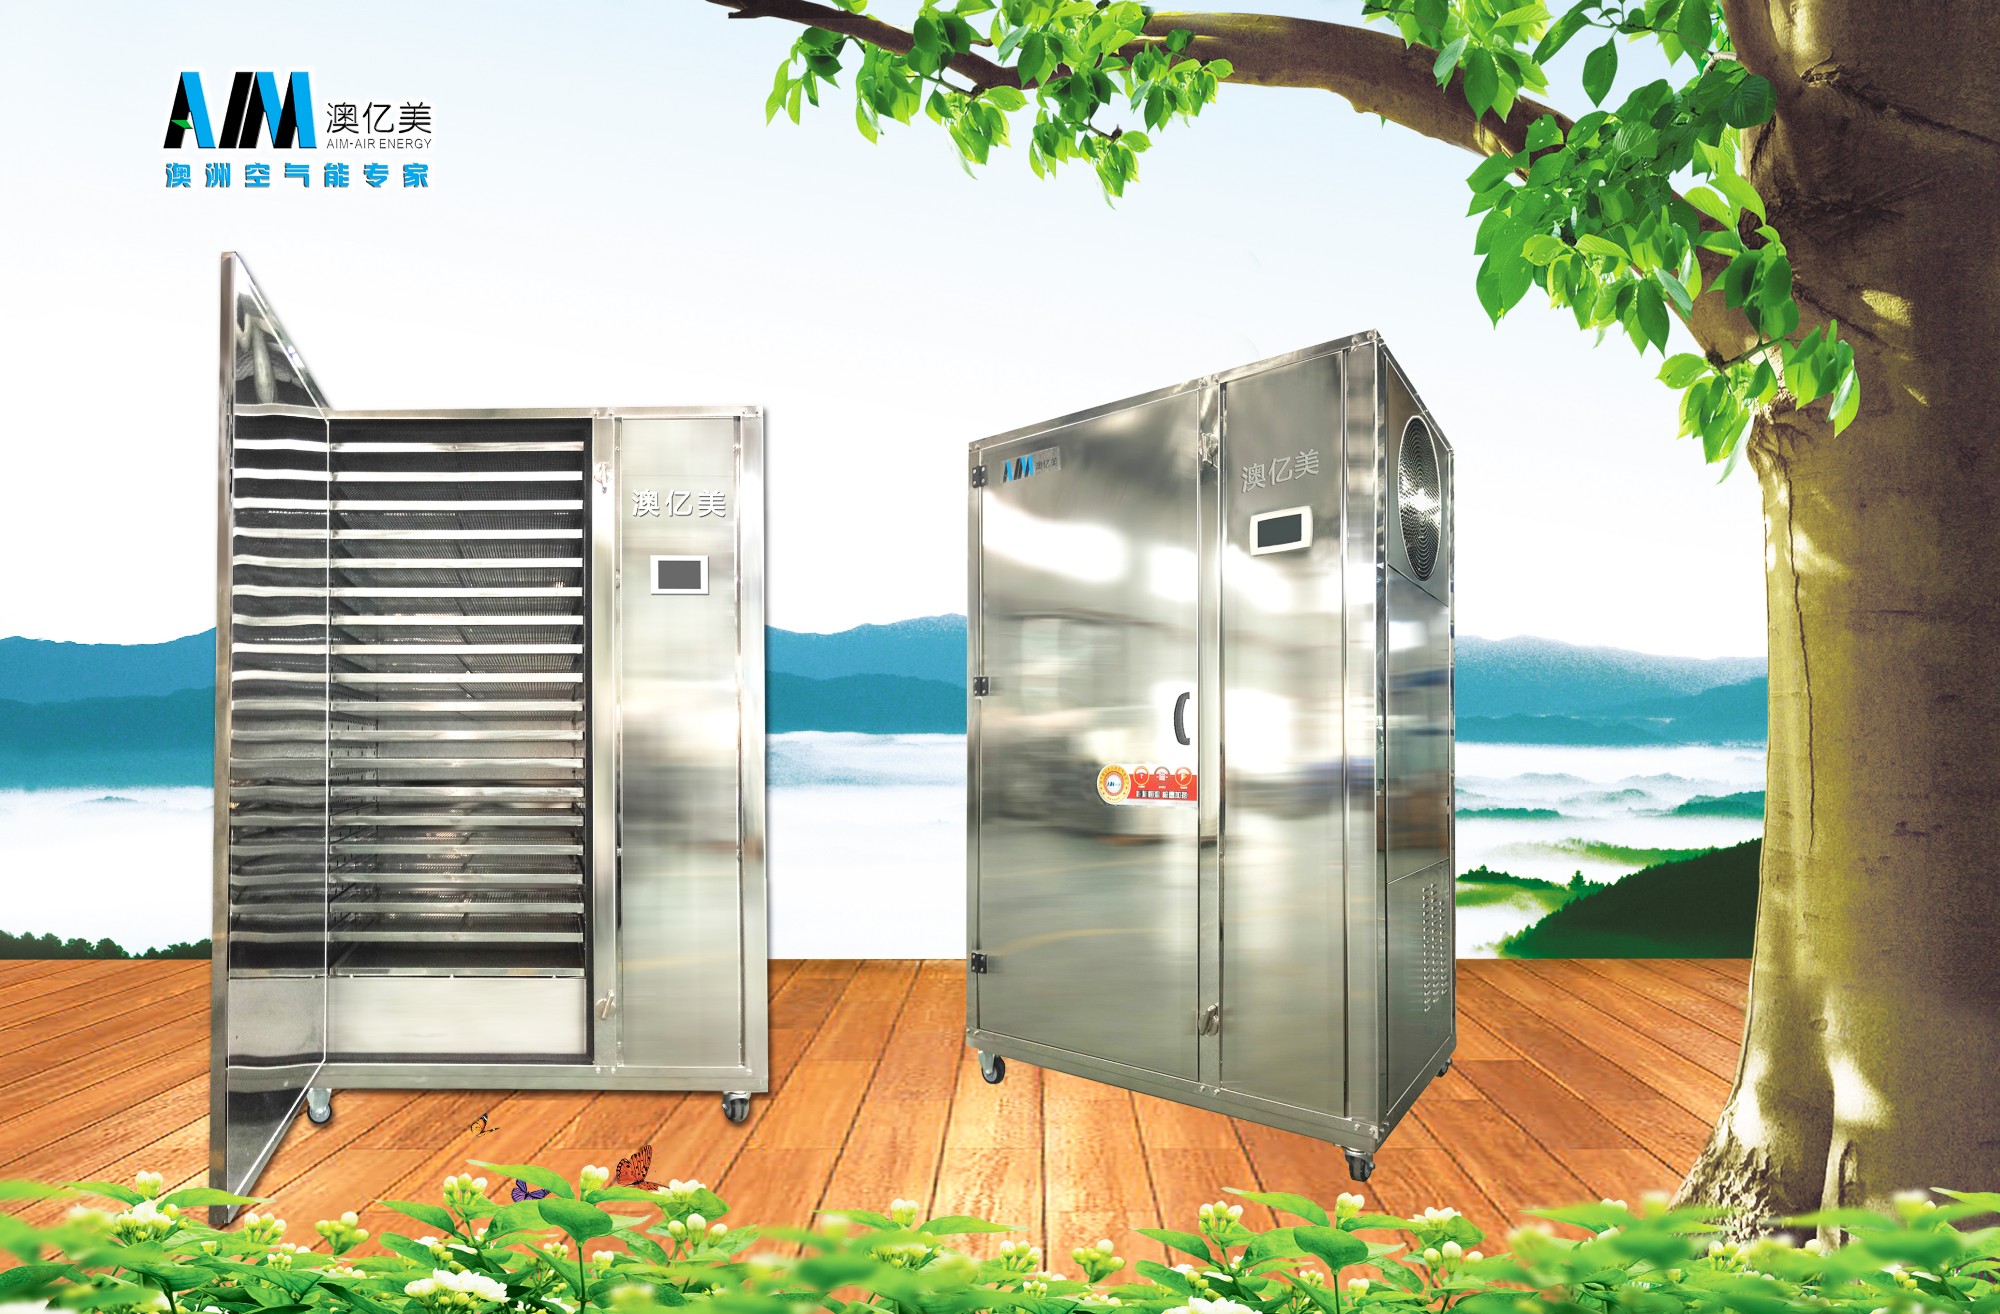 High quality energy saving techology  Drying Unit Quotes,China heat pump equipment Drying Unit Factory, pump equipmentDrying Unit Purchasing